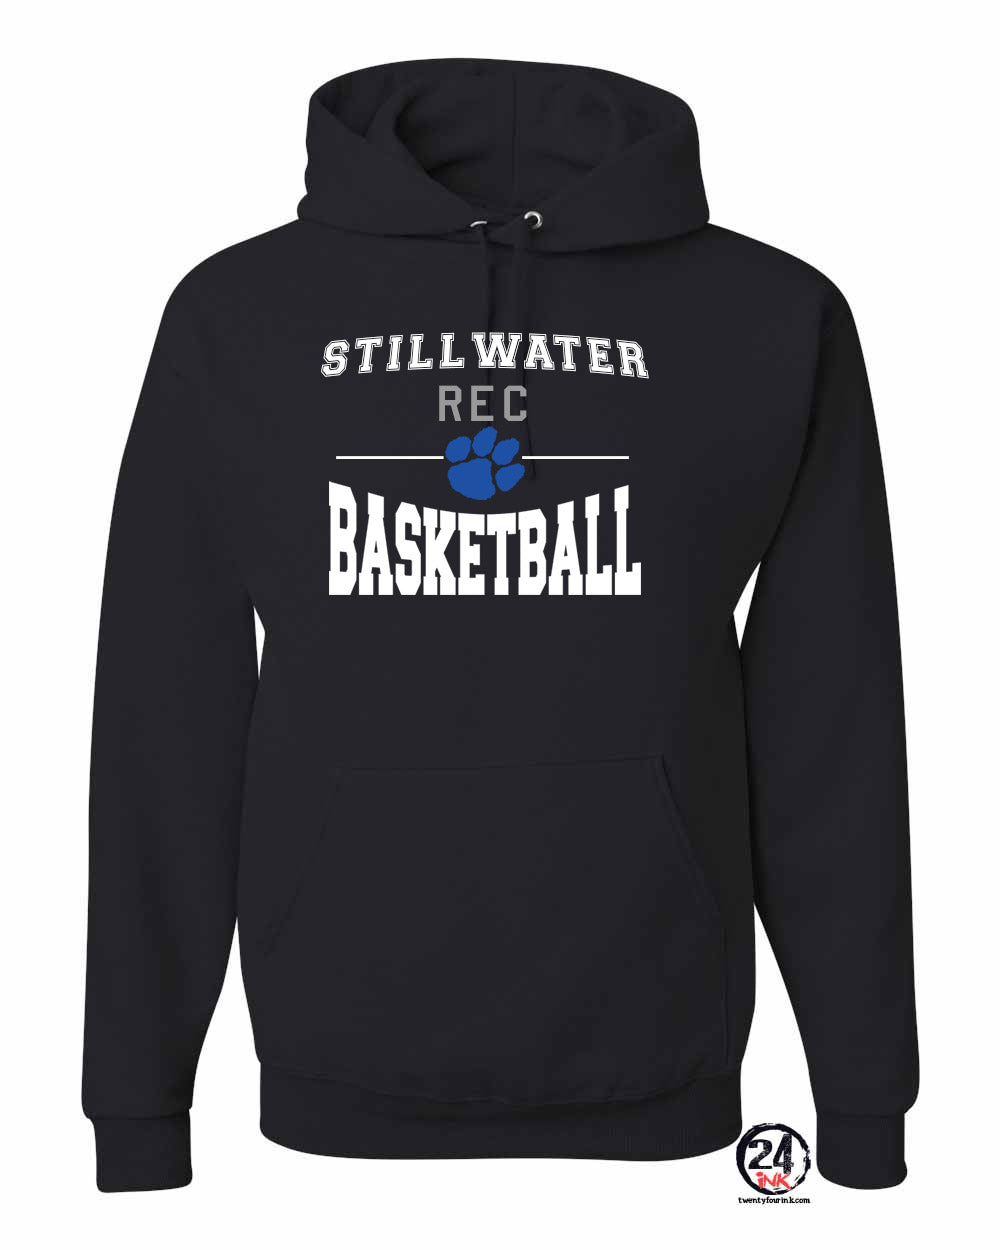 Stillwater Basketball Hooded Sweatshirt